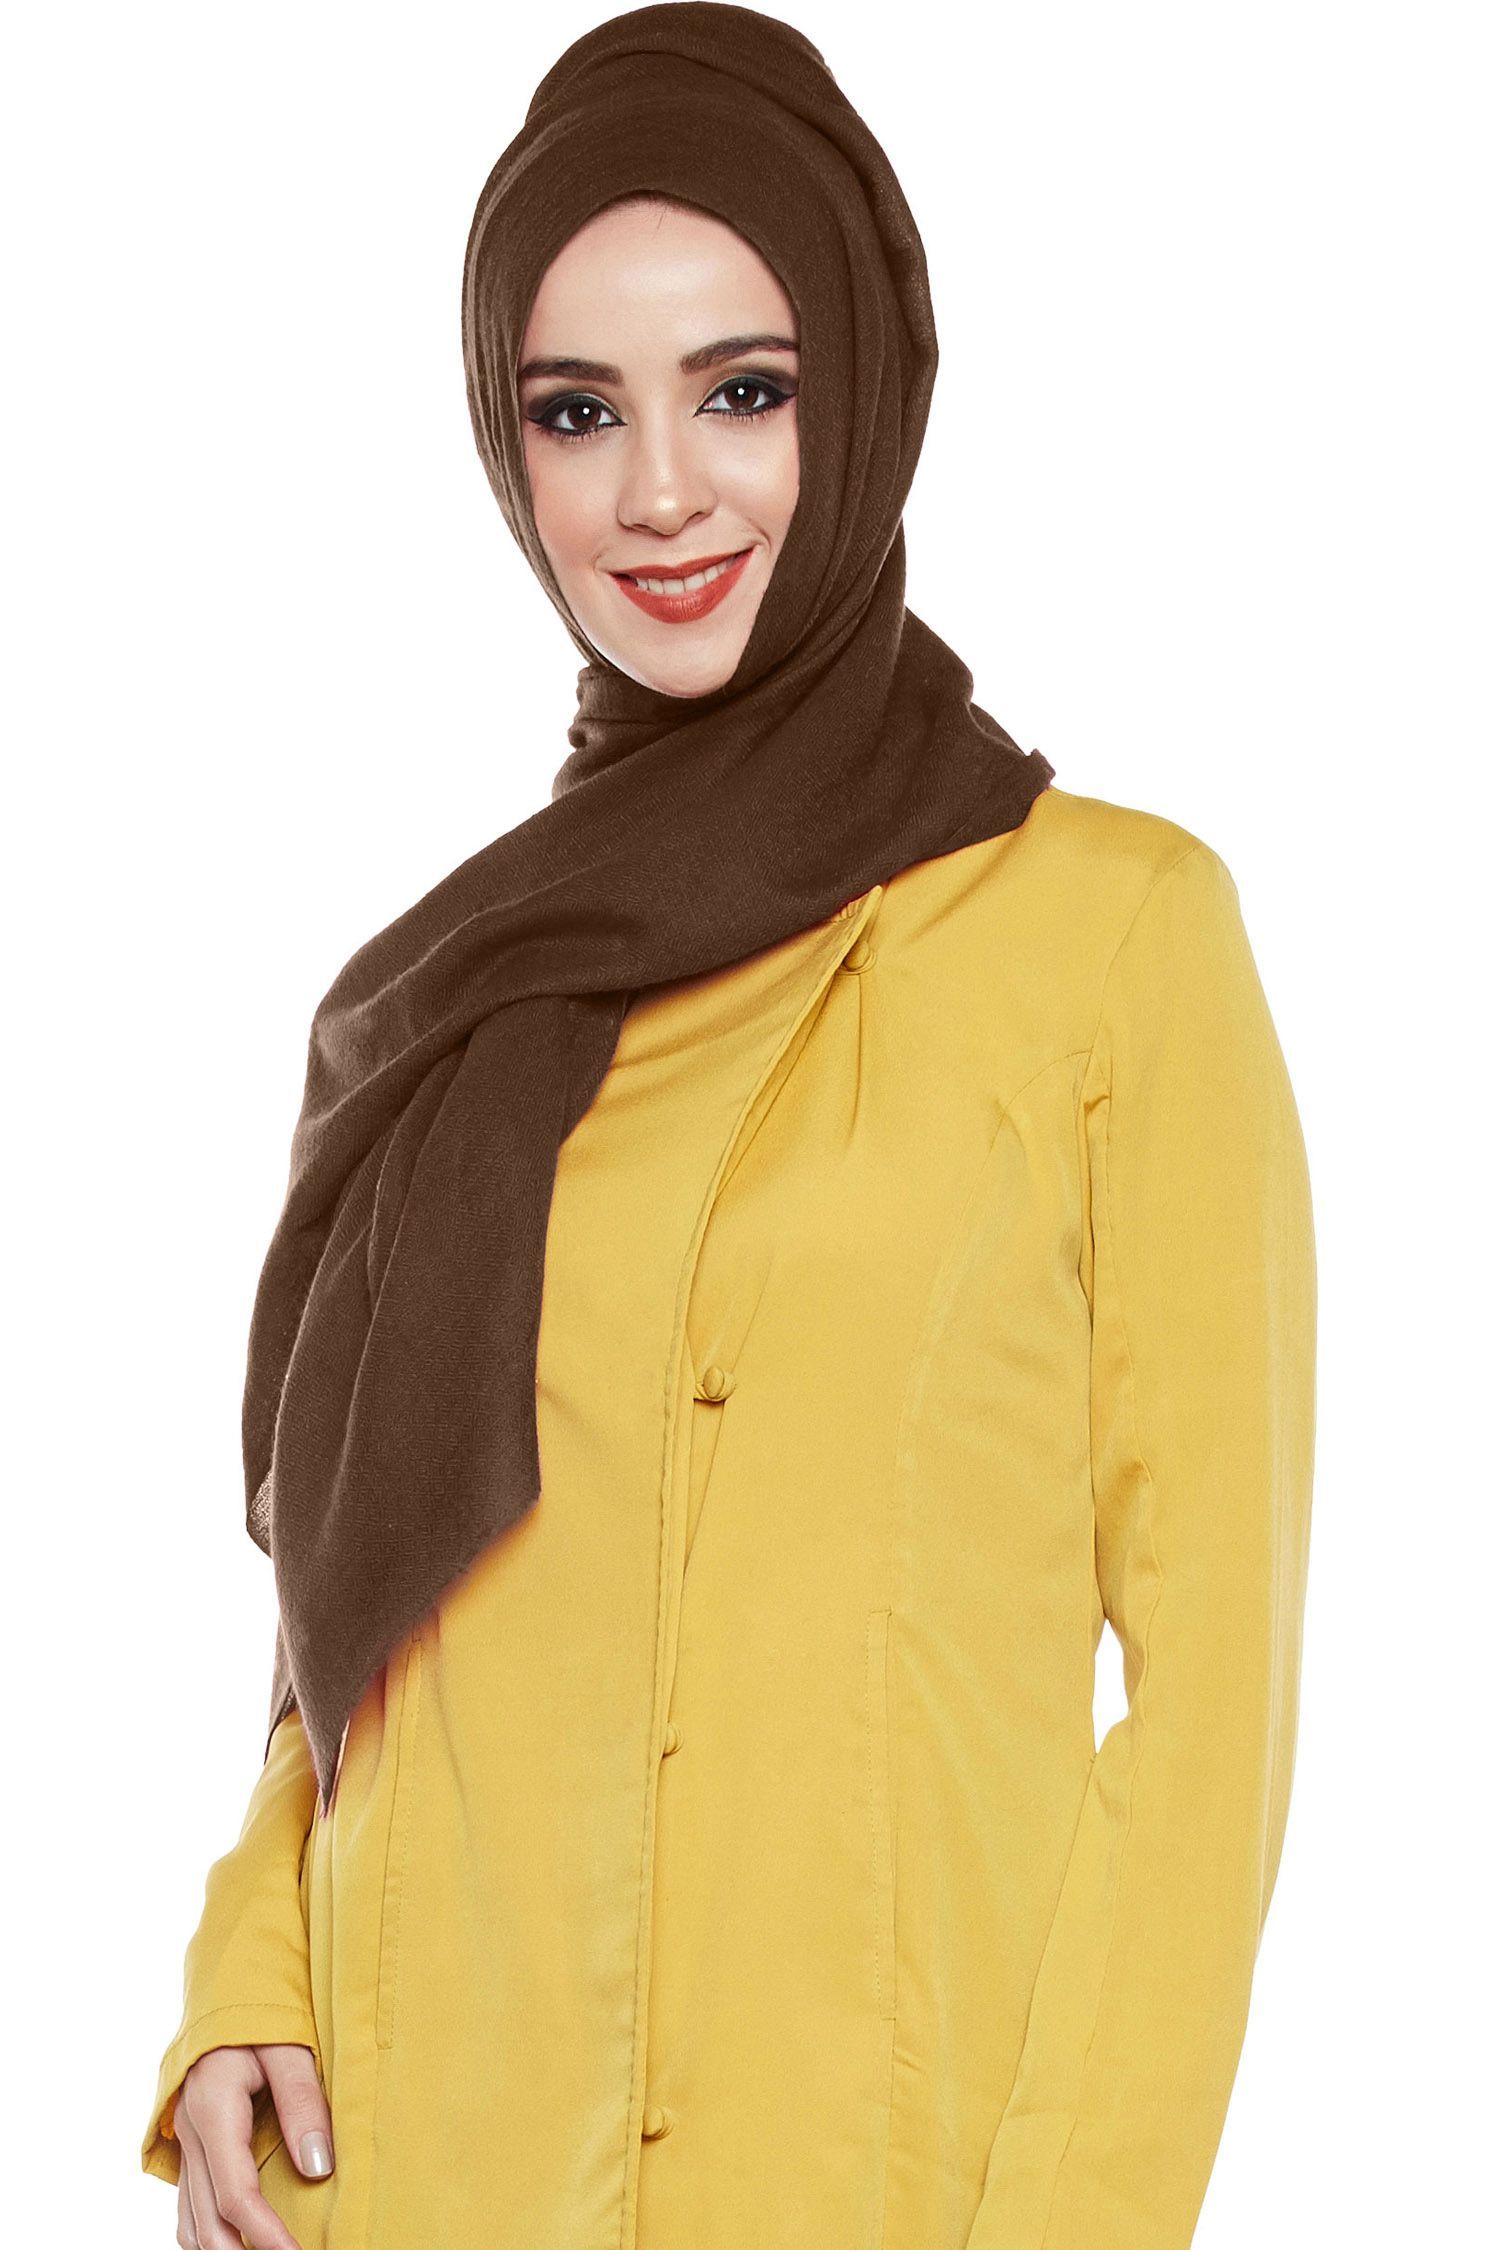 Dark Brown Pashmina Hijab | Handmade Cashmere Head Scarf